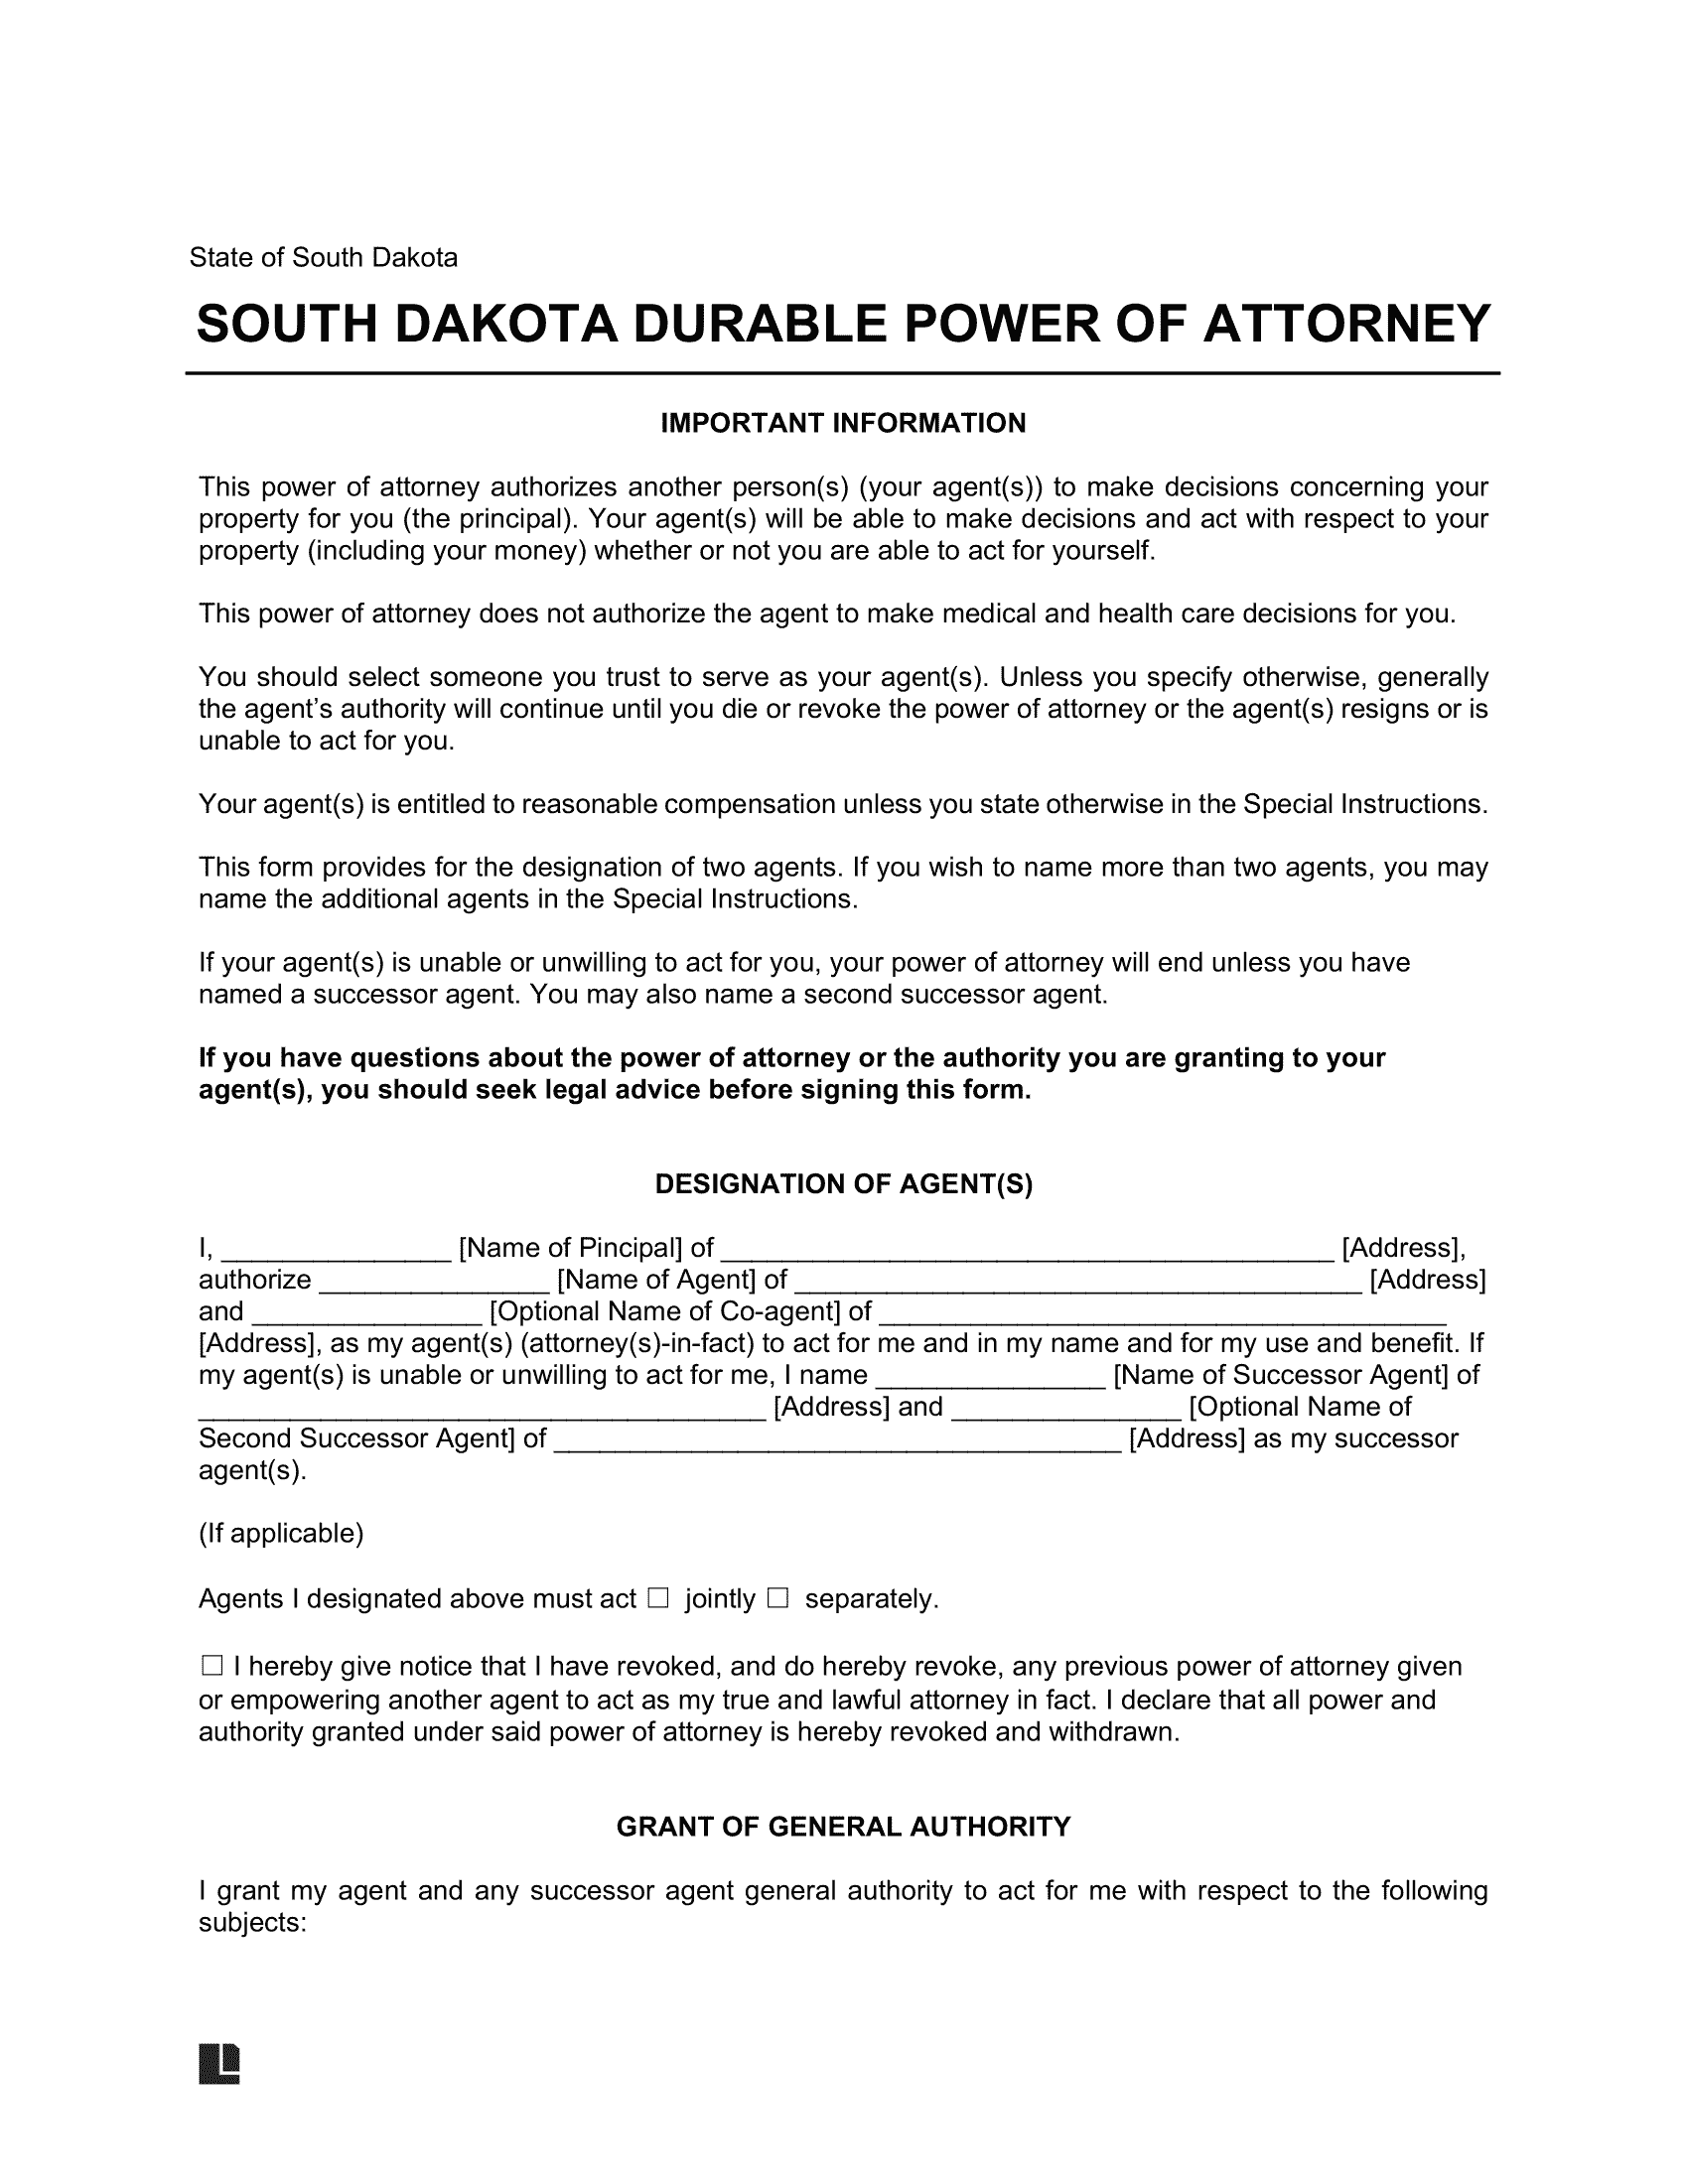 South Dakota Durable Statutory Power of Attorney Form